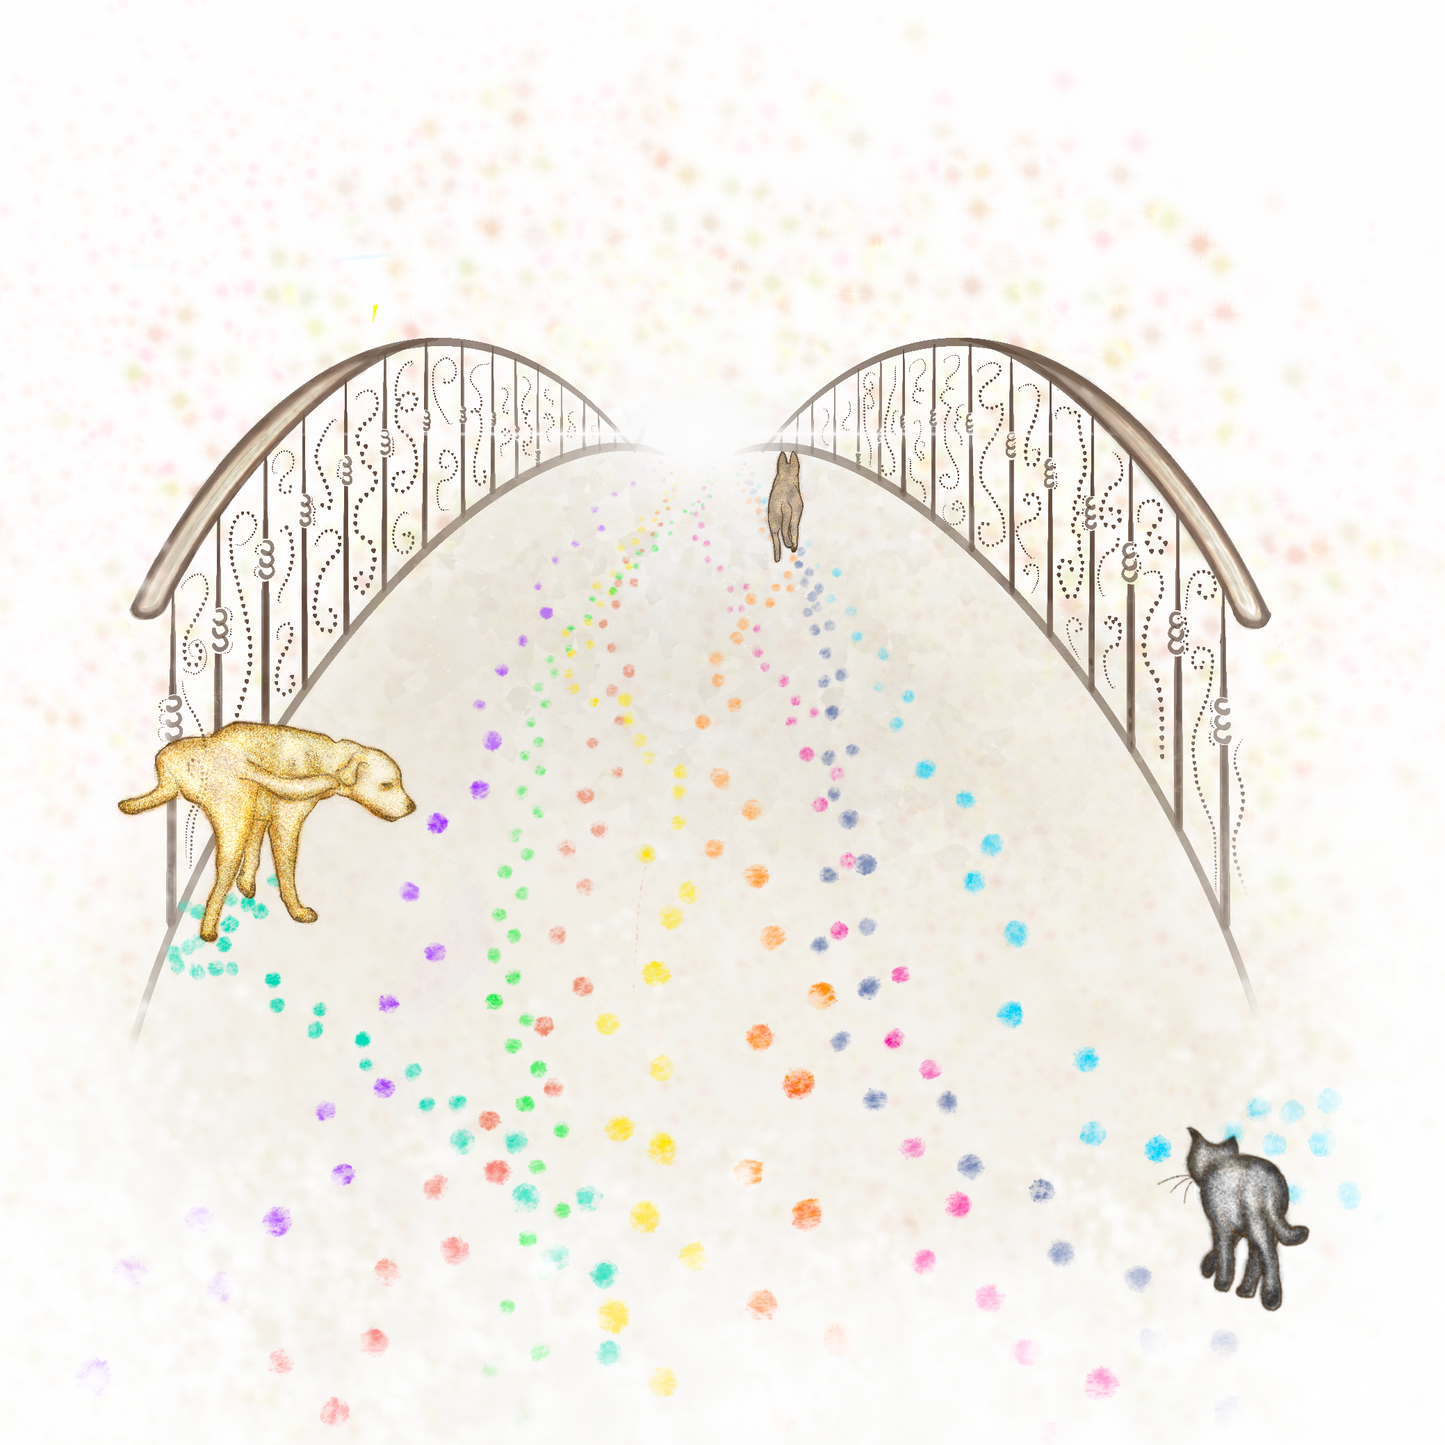 Pets entering the rainbow bridge